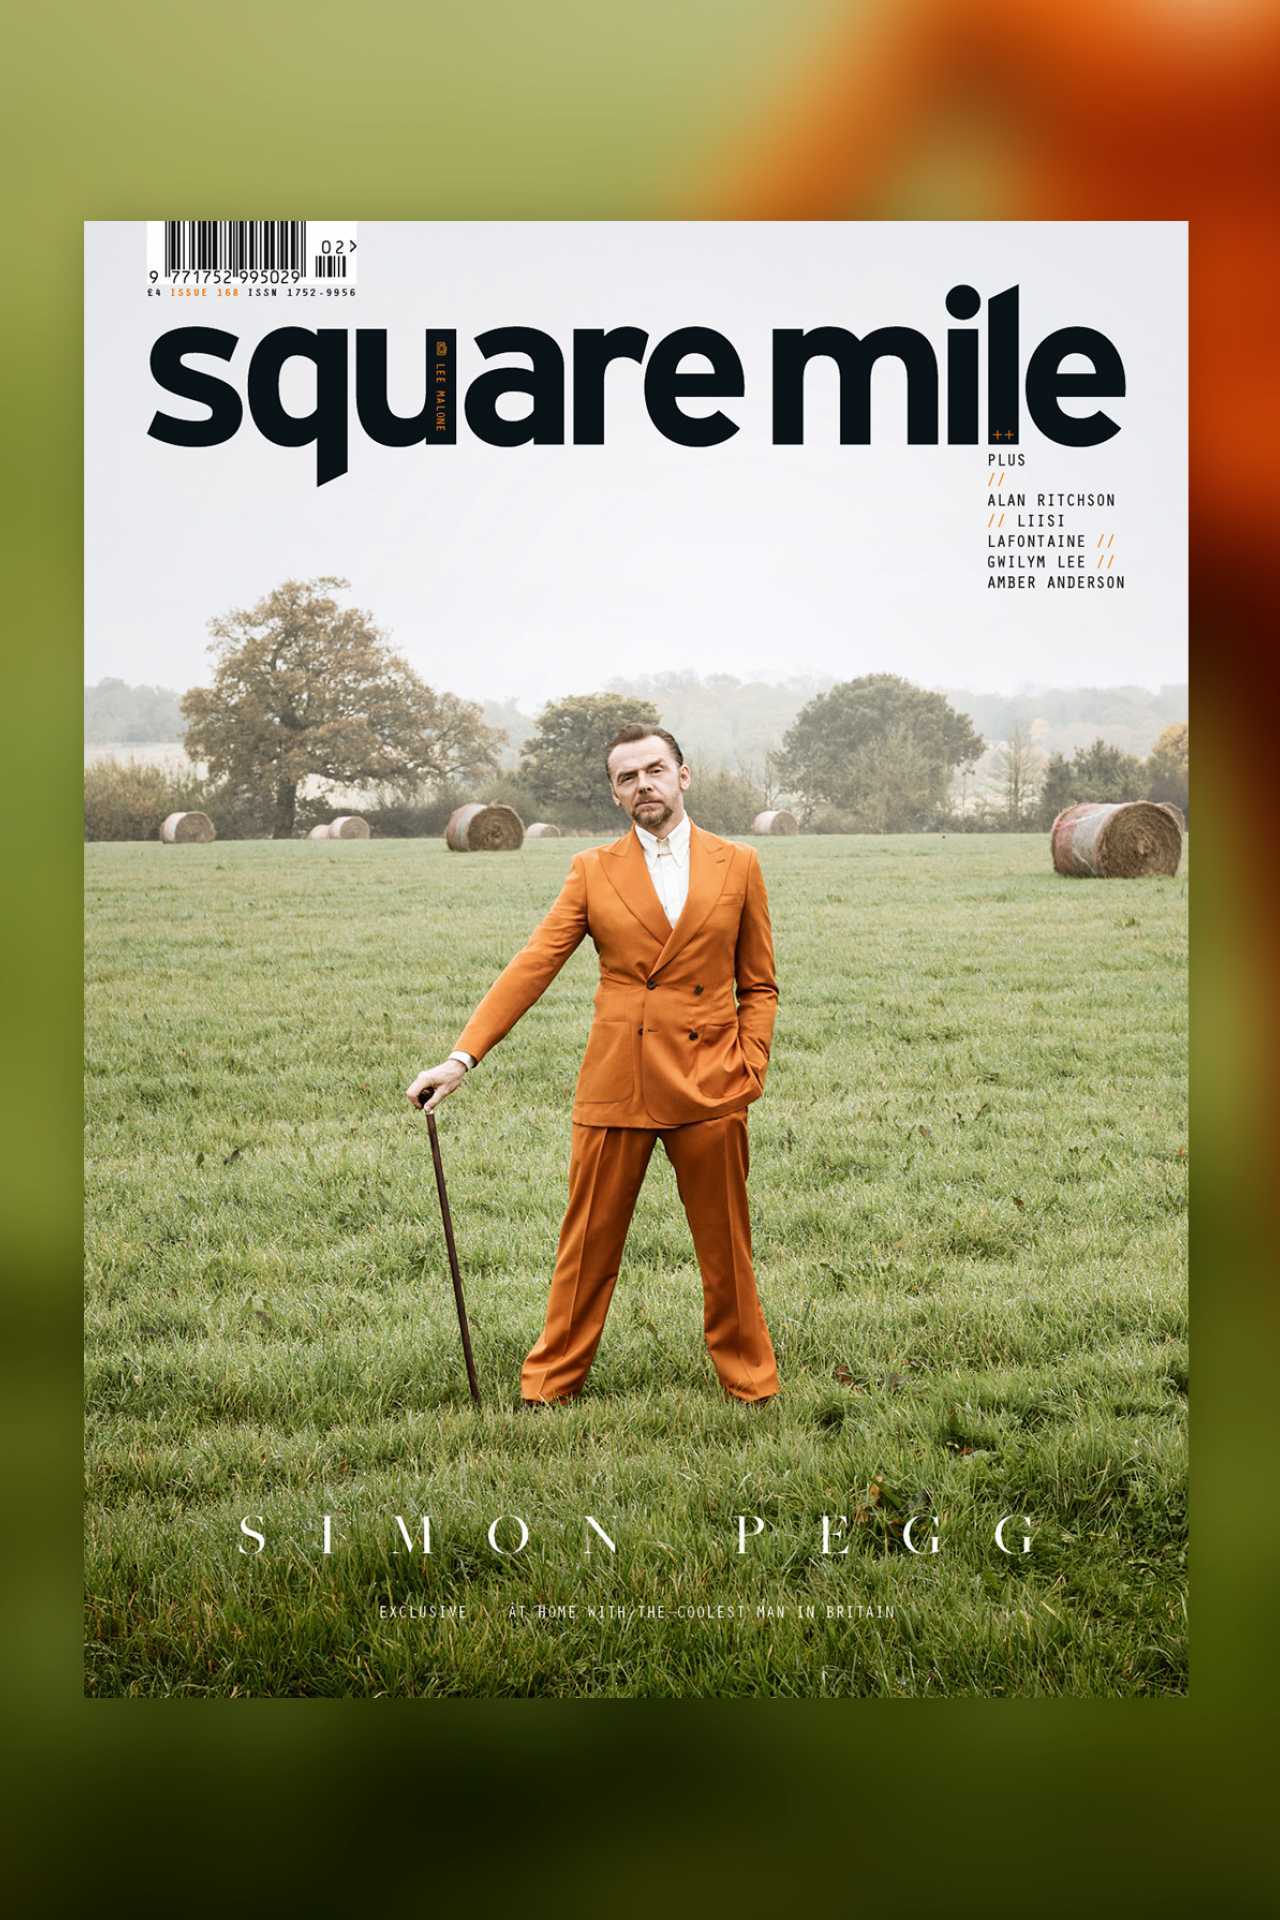 Simon Pegg Newsstand cover – Square Mile